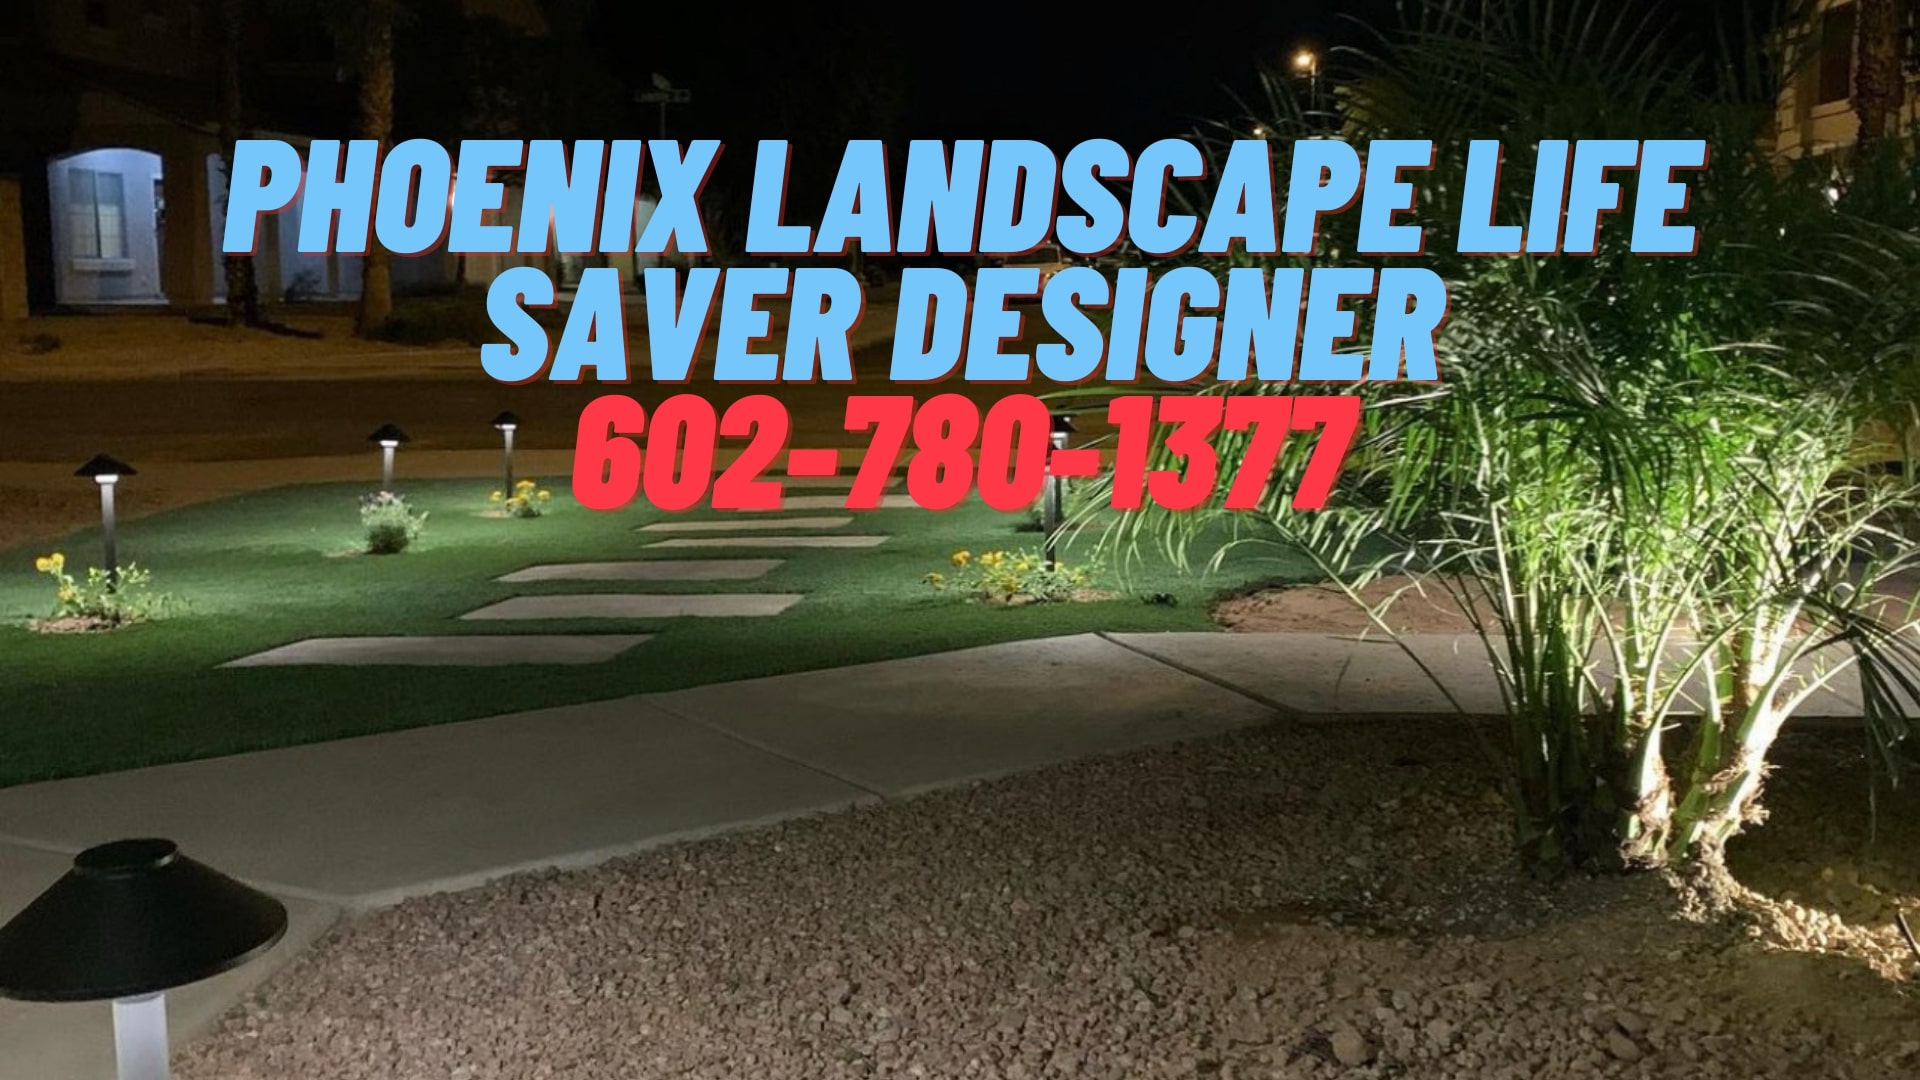 Phoenix Landscape Life Saver Designer